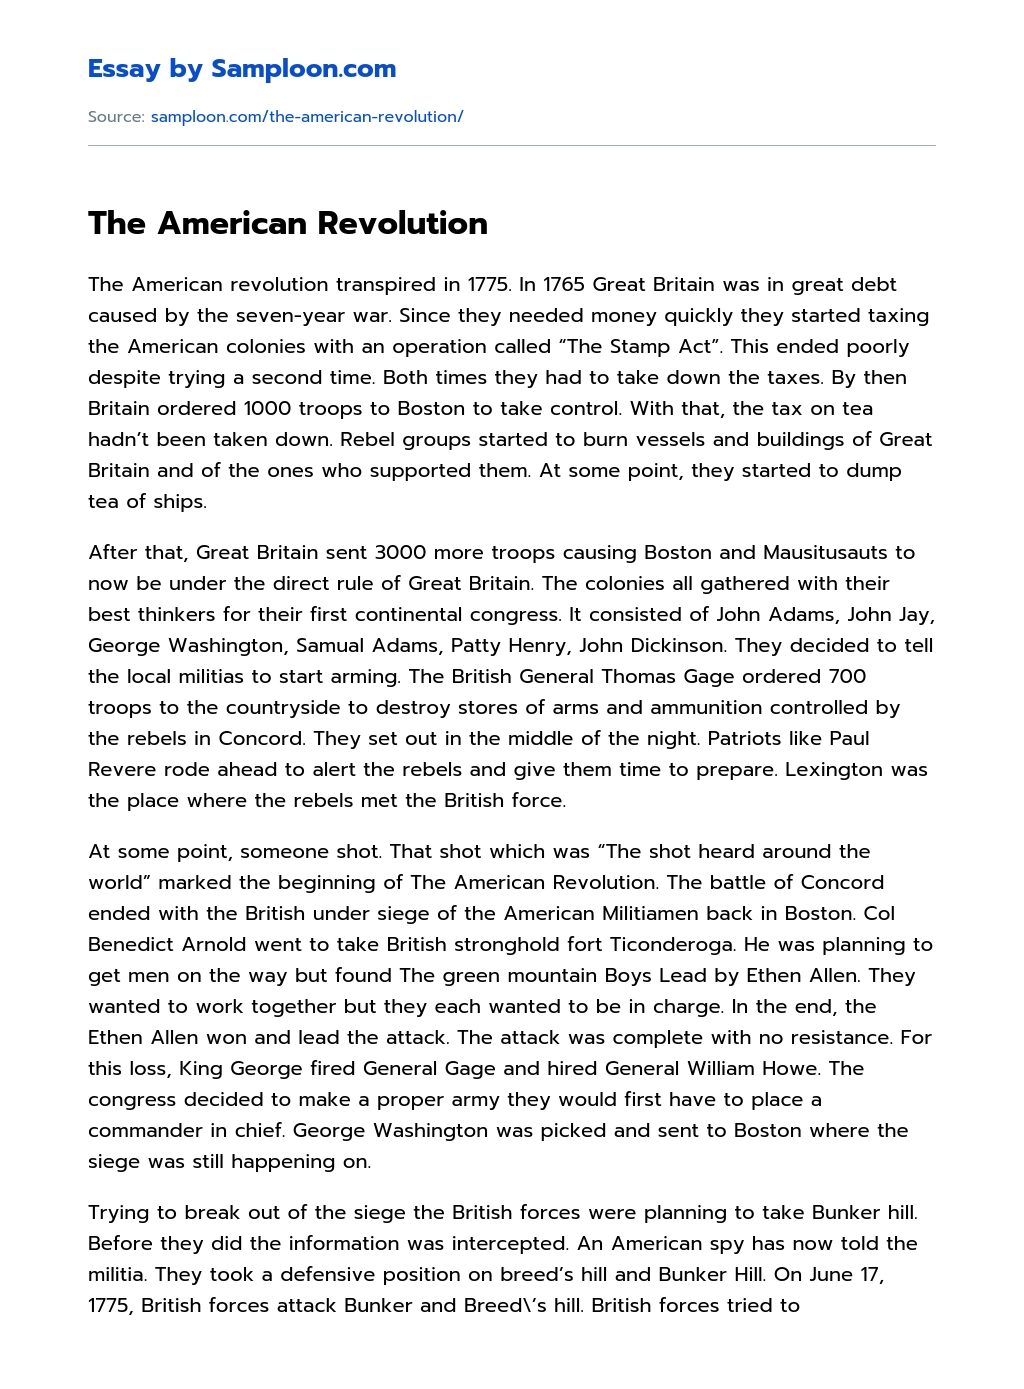 The American Revolution essay